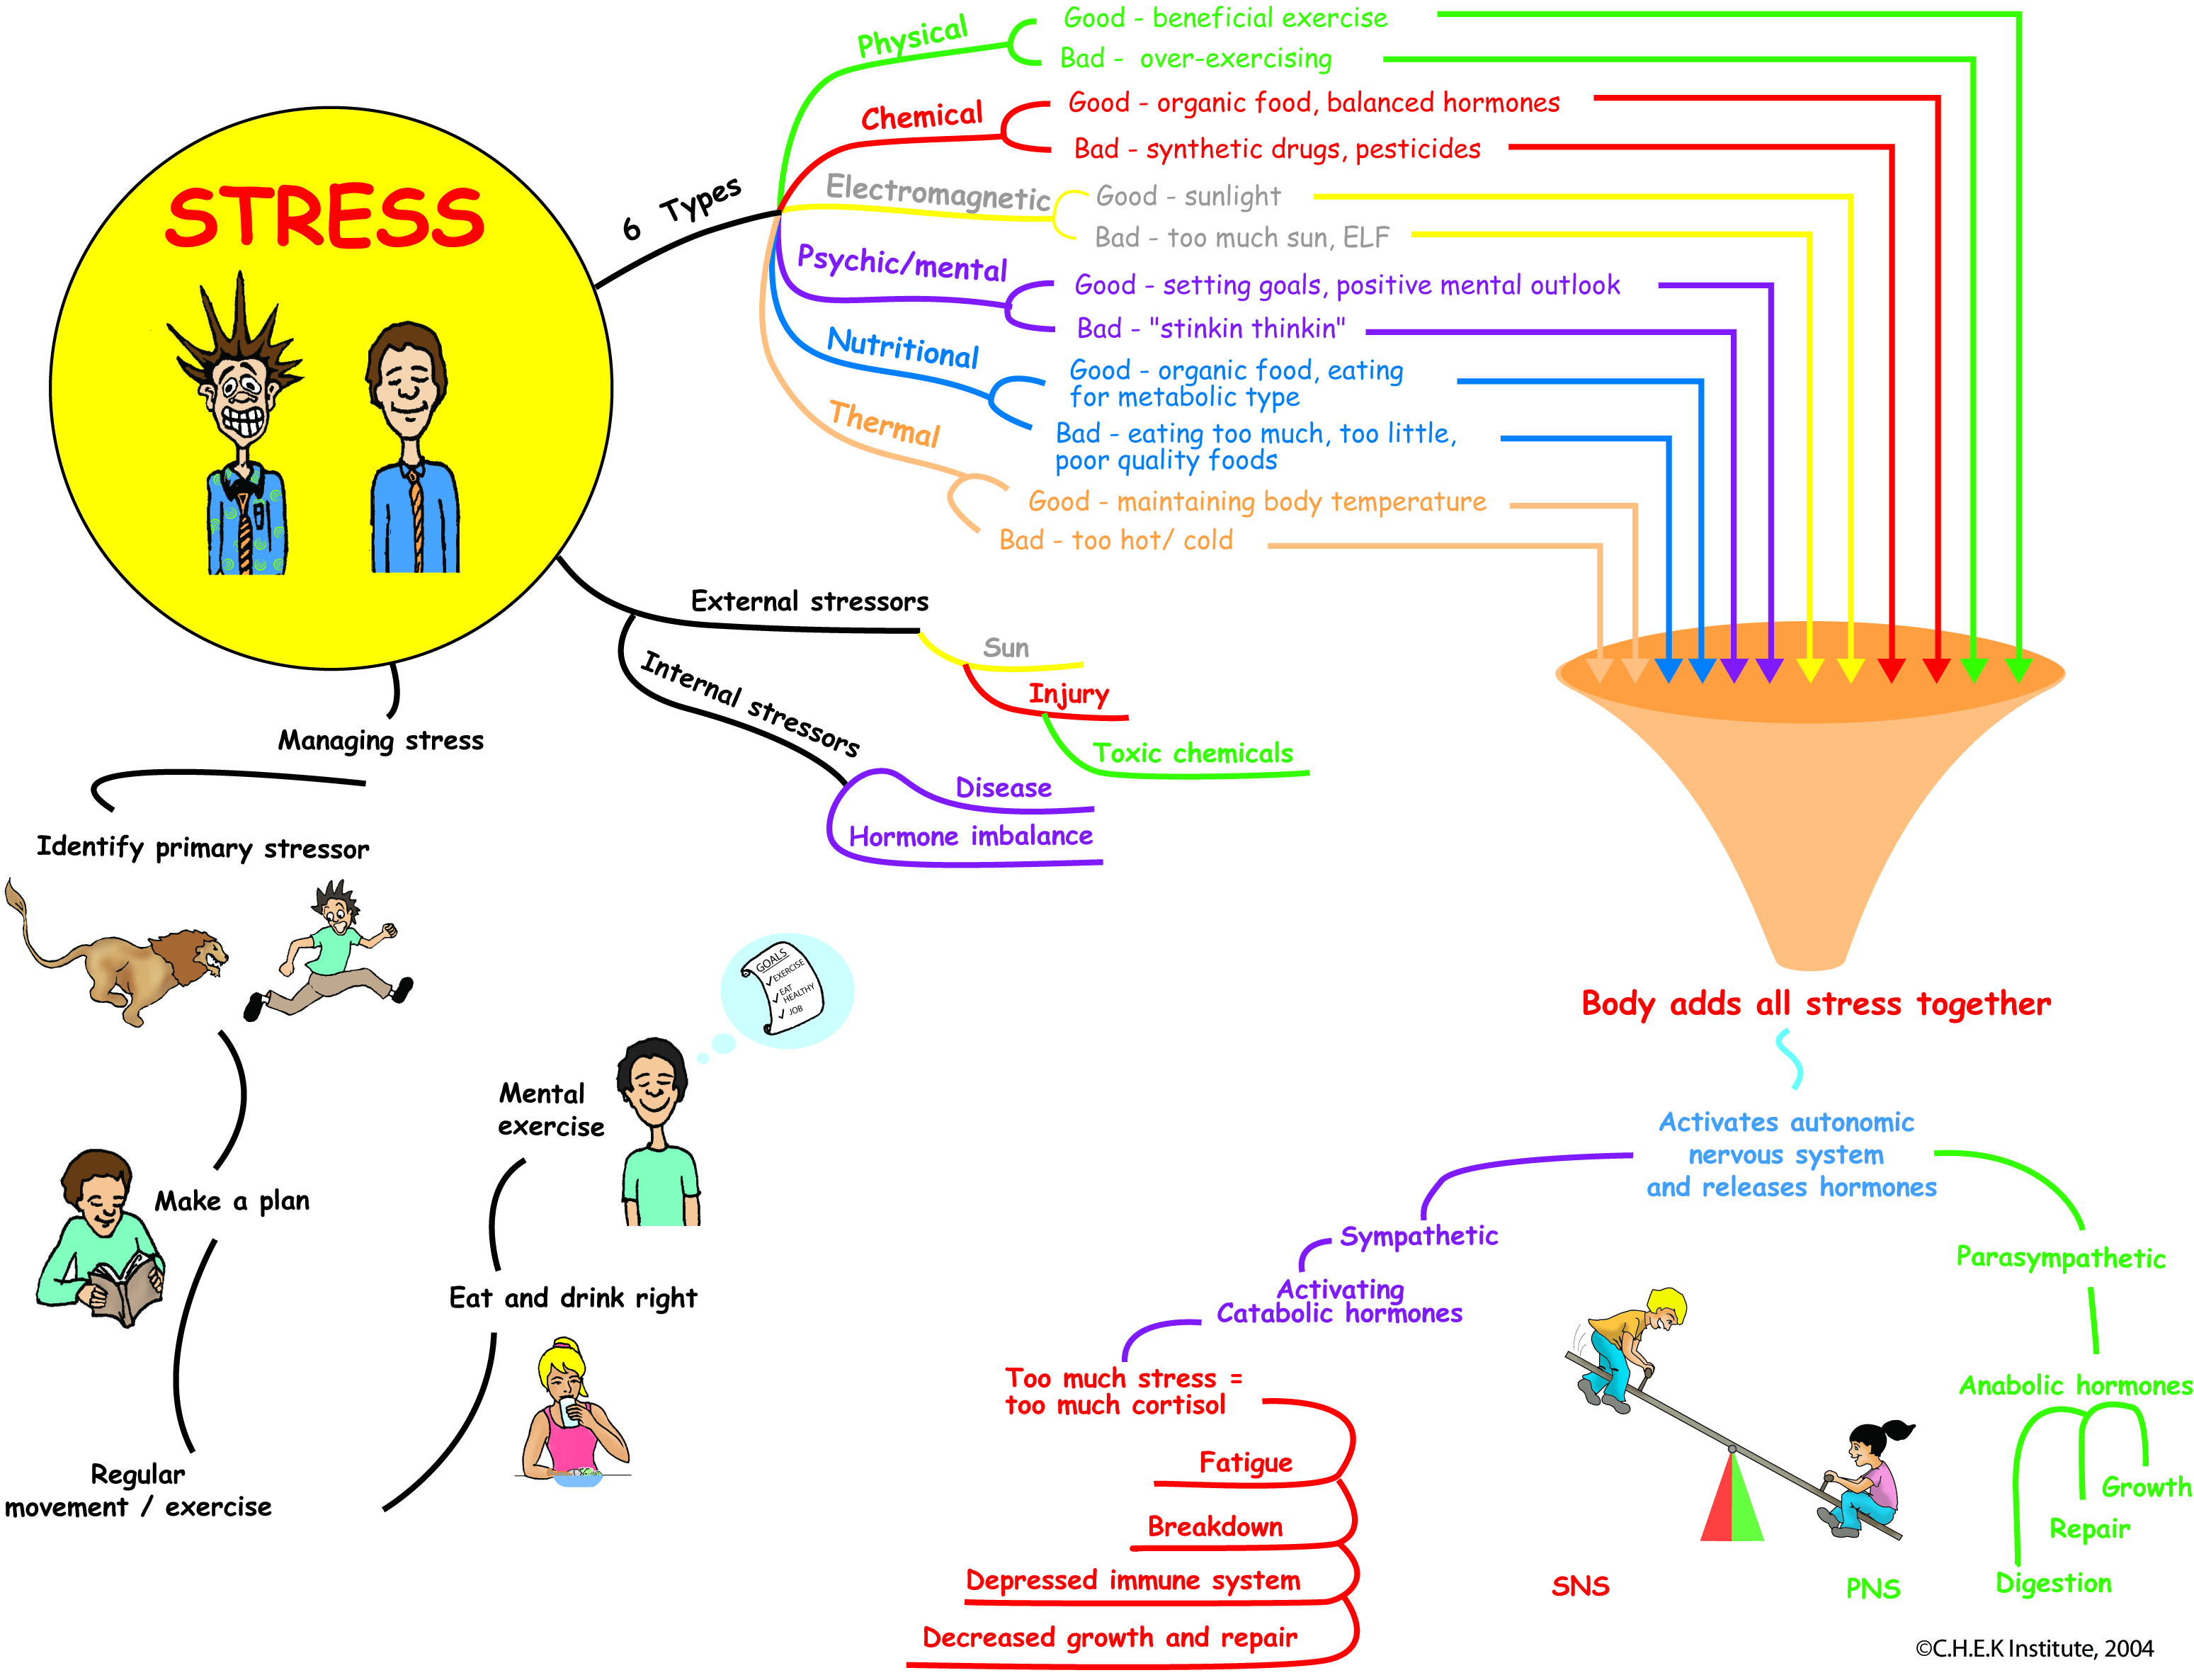 Types of Stress